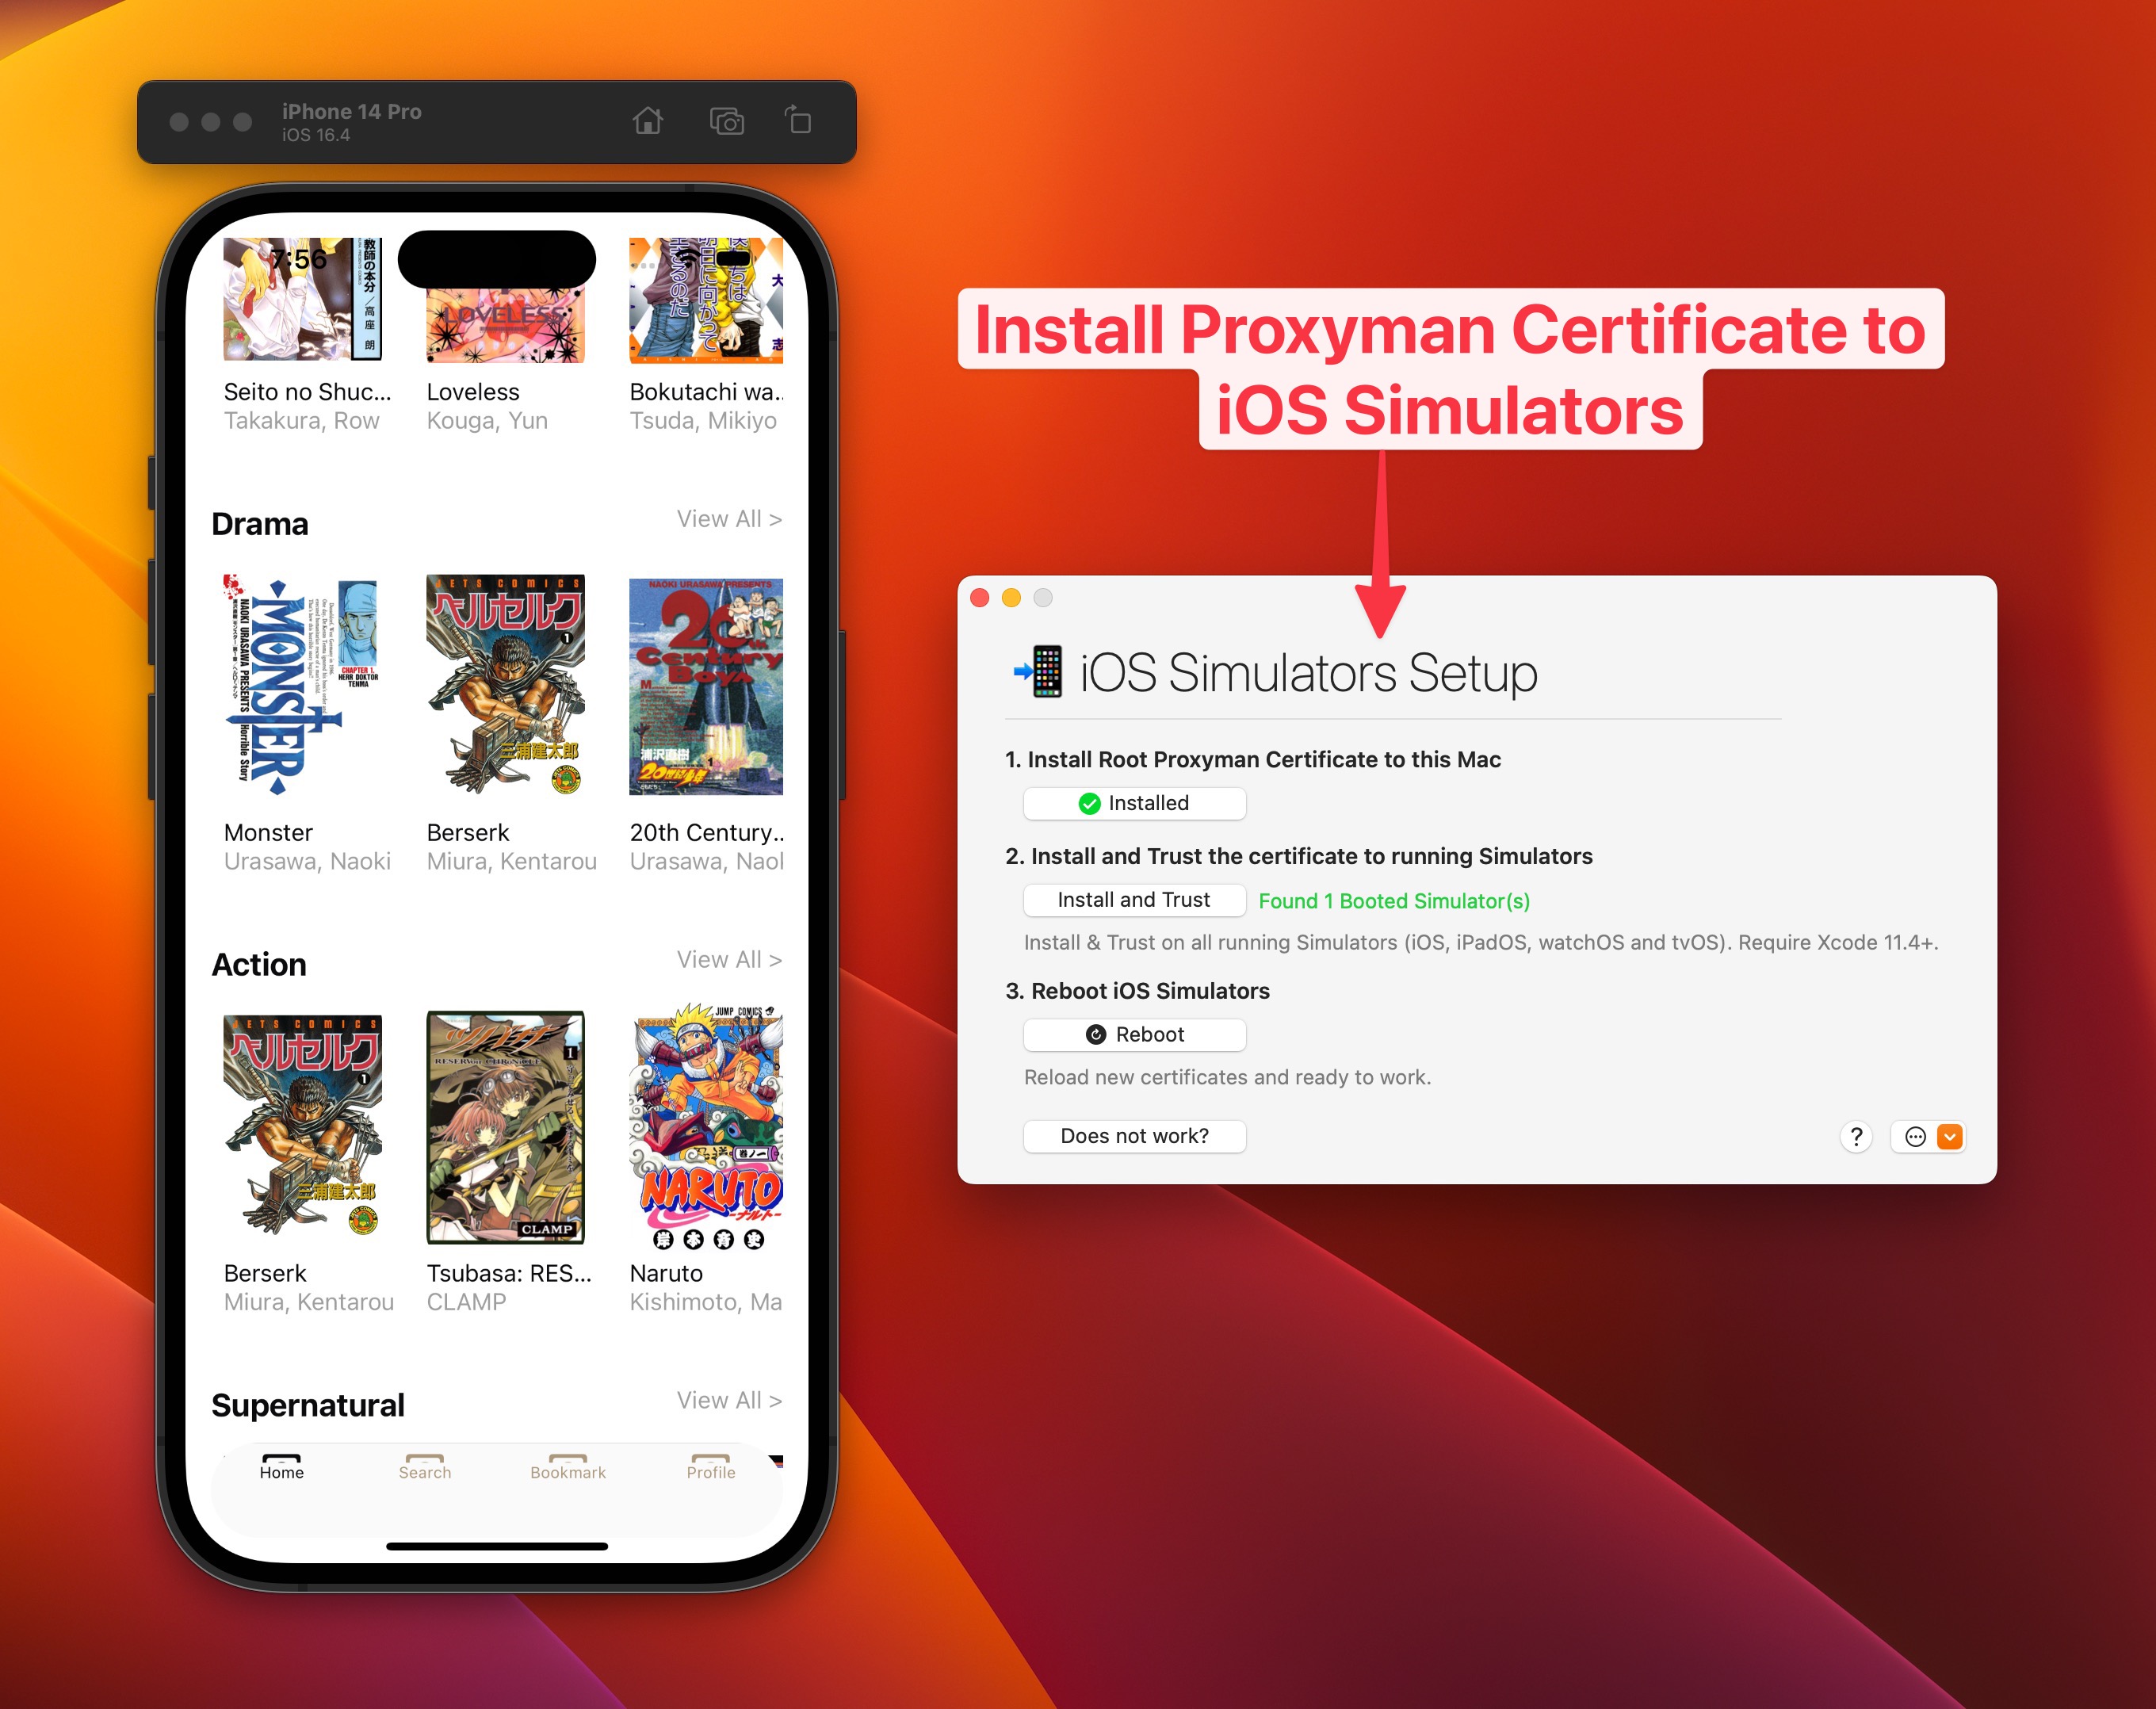 Install Proxyman Certificate for iOS Simulators